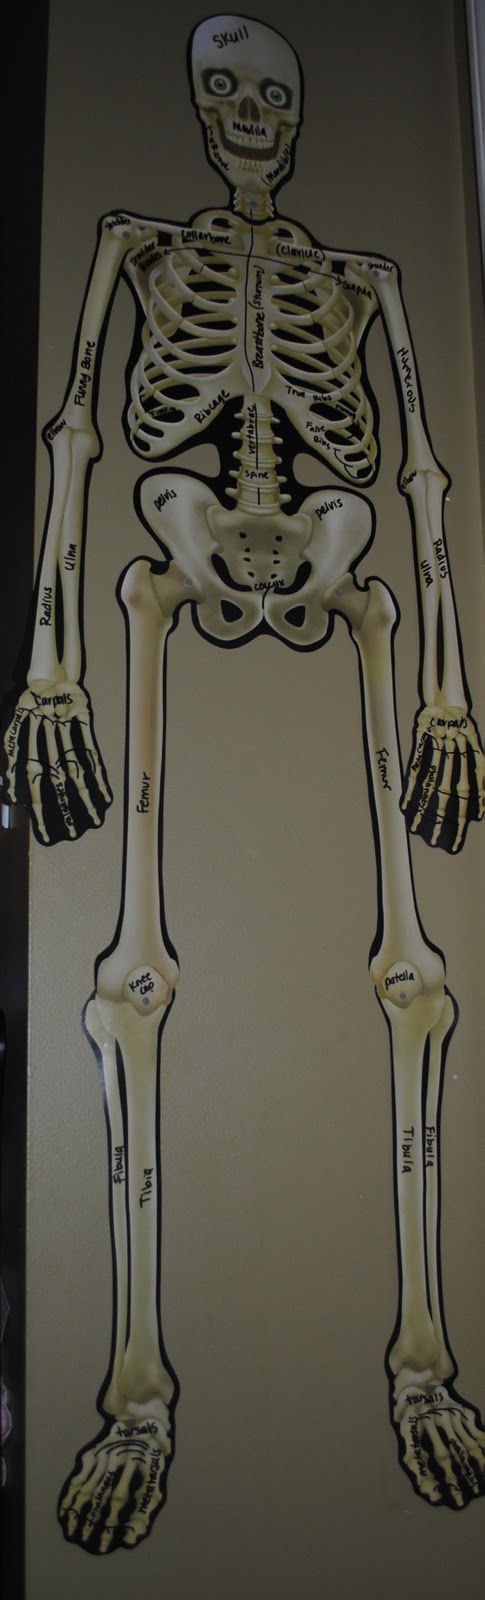 The Geek and the Chic (Sheek): Homeschool Human Skeleton Unit Study